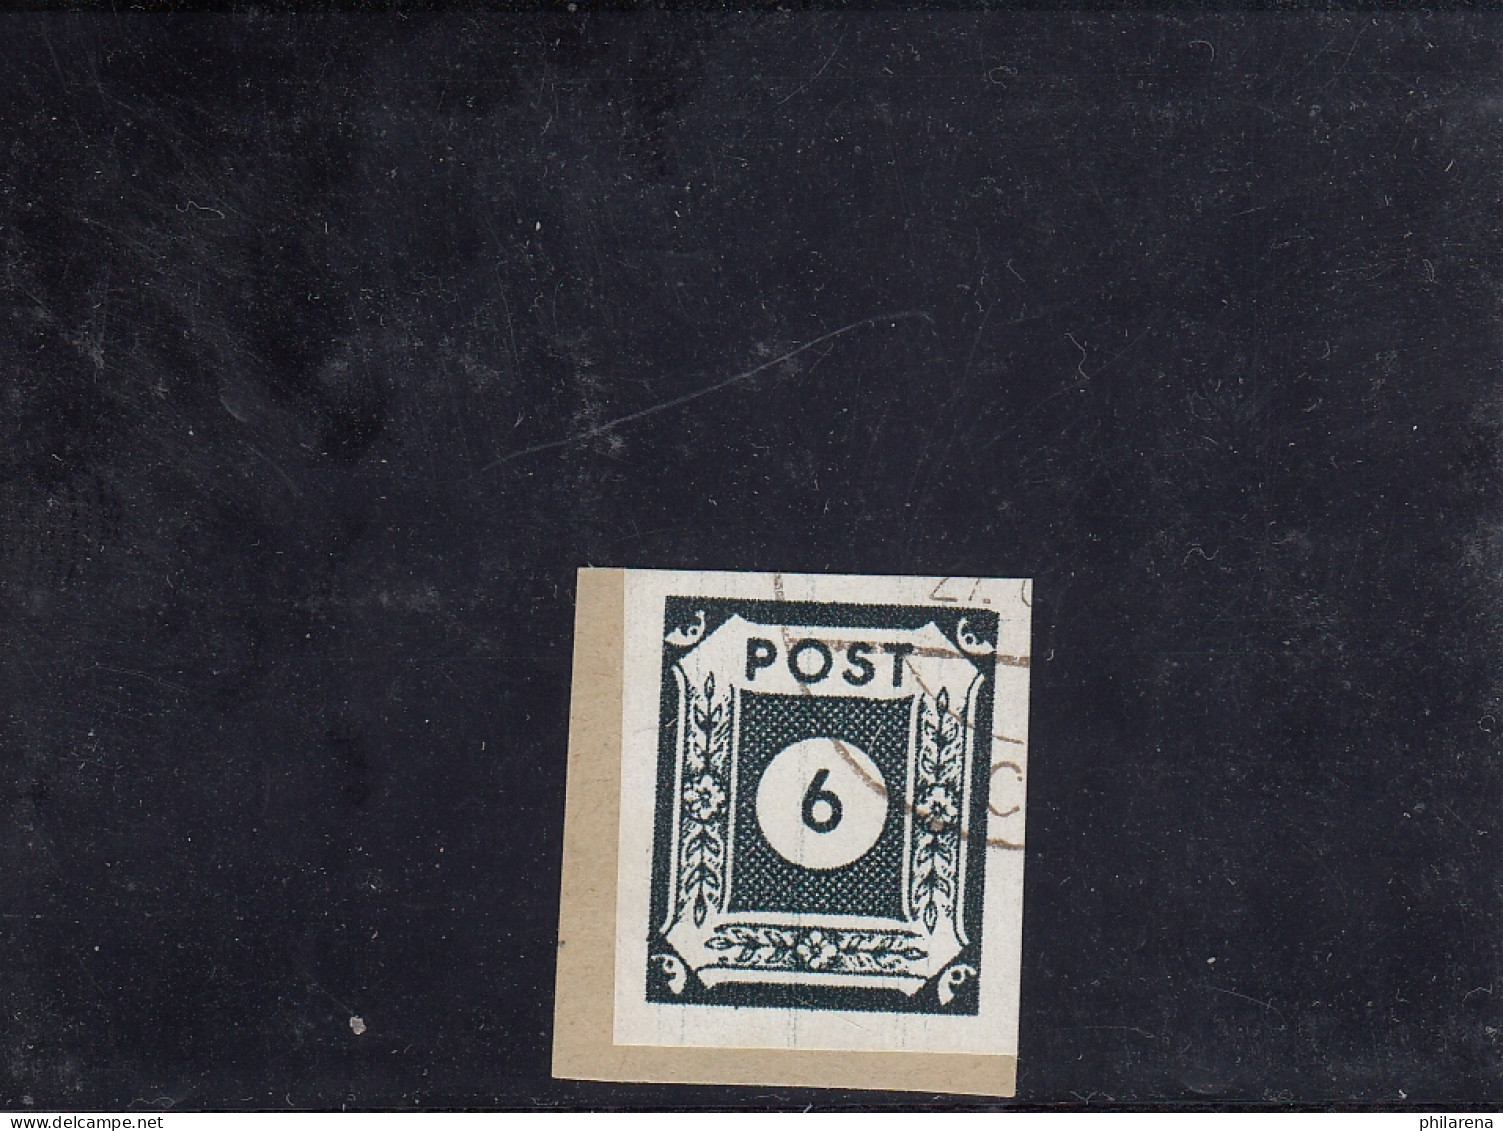 SBZ: MiNr. 43 A C, Gestempelt Dresden, Farbfehldruck, Briefstück, BPP Attest - Gebraucht